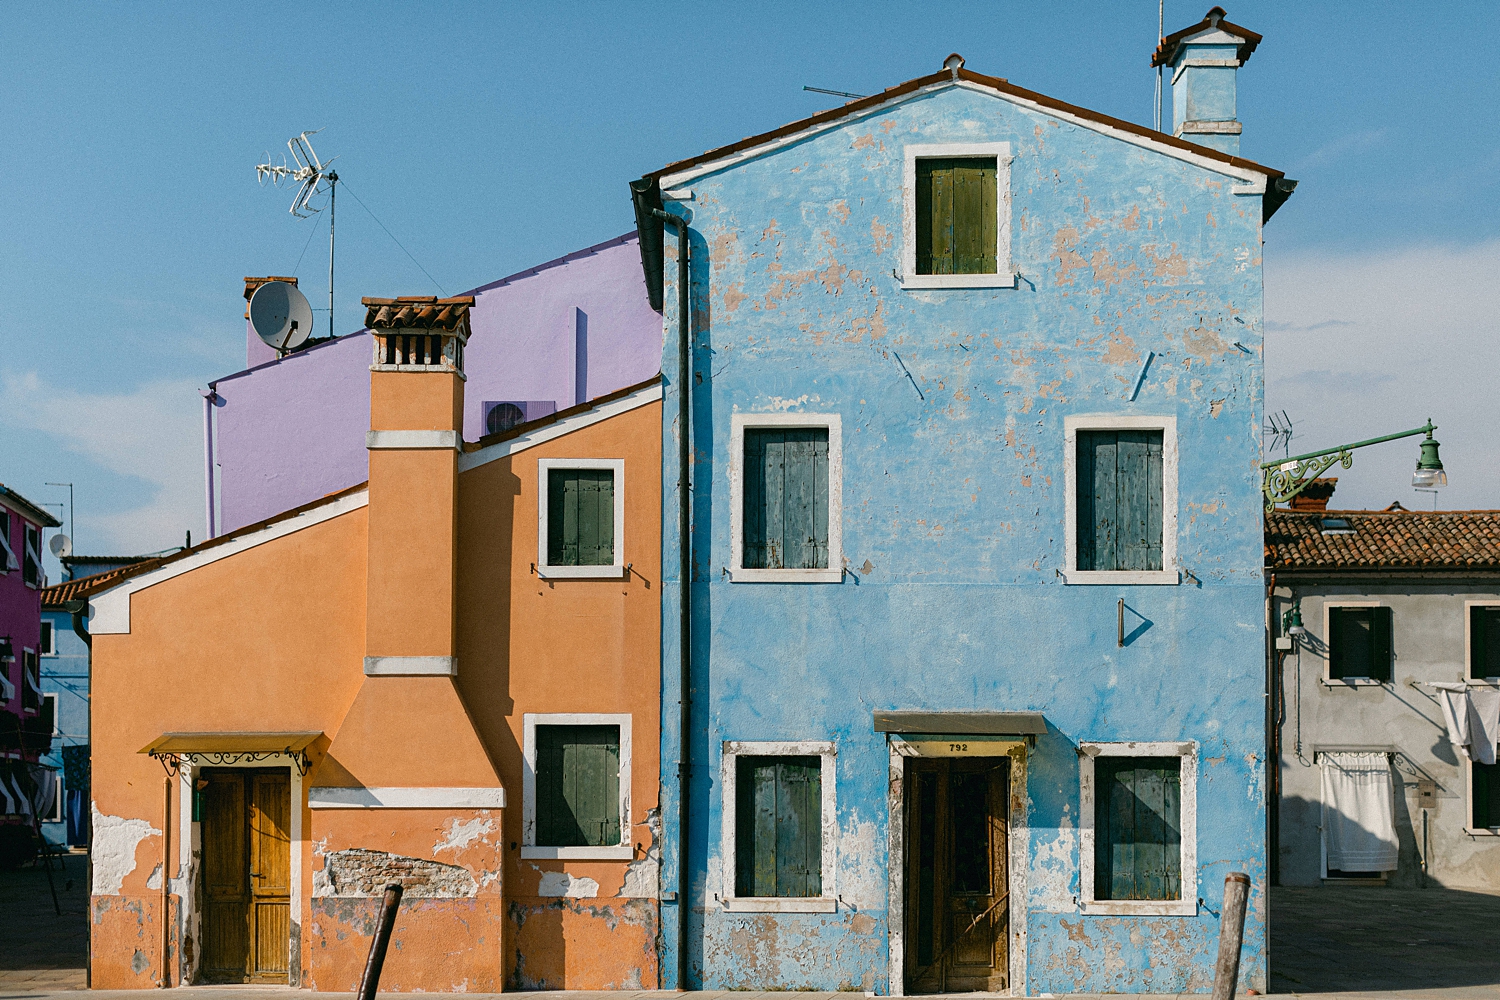 blue, orange, and purple buildings in Burano Italy